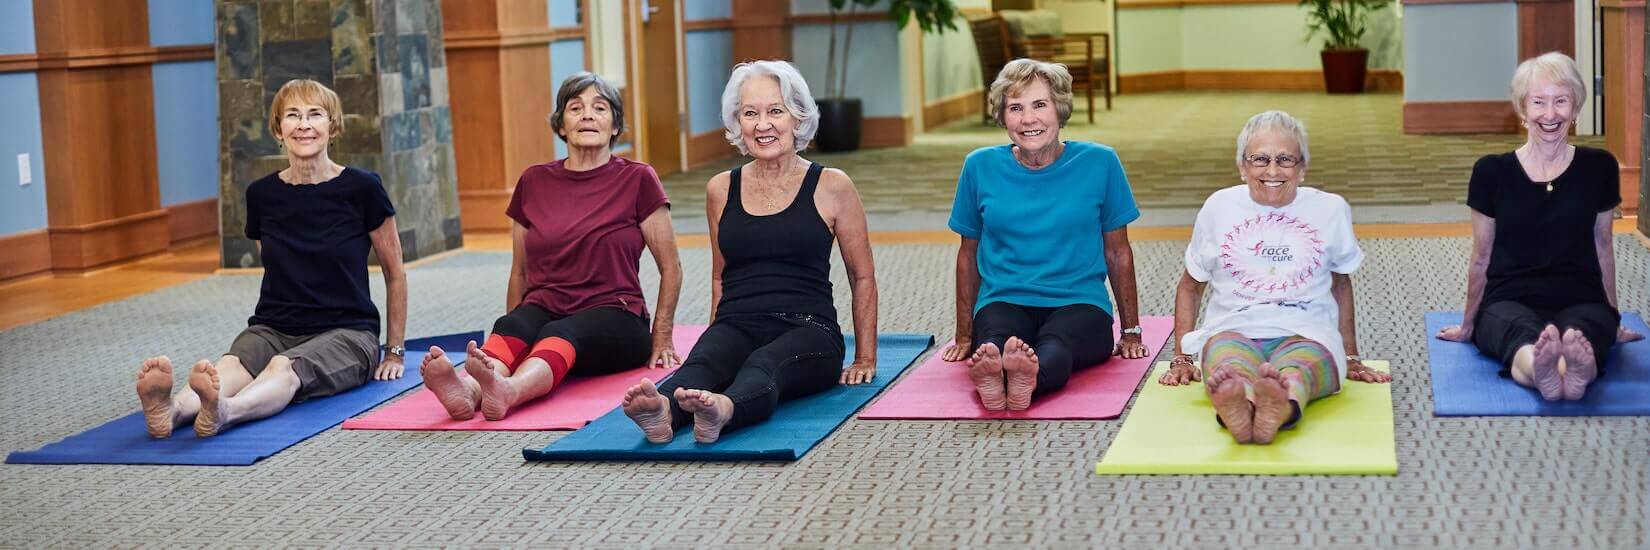 activities calendar, senior women doing yoga